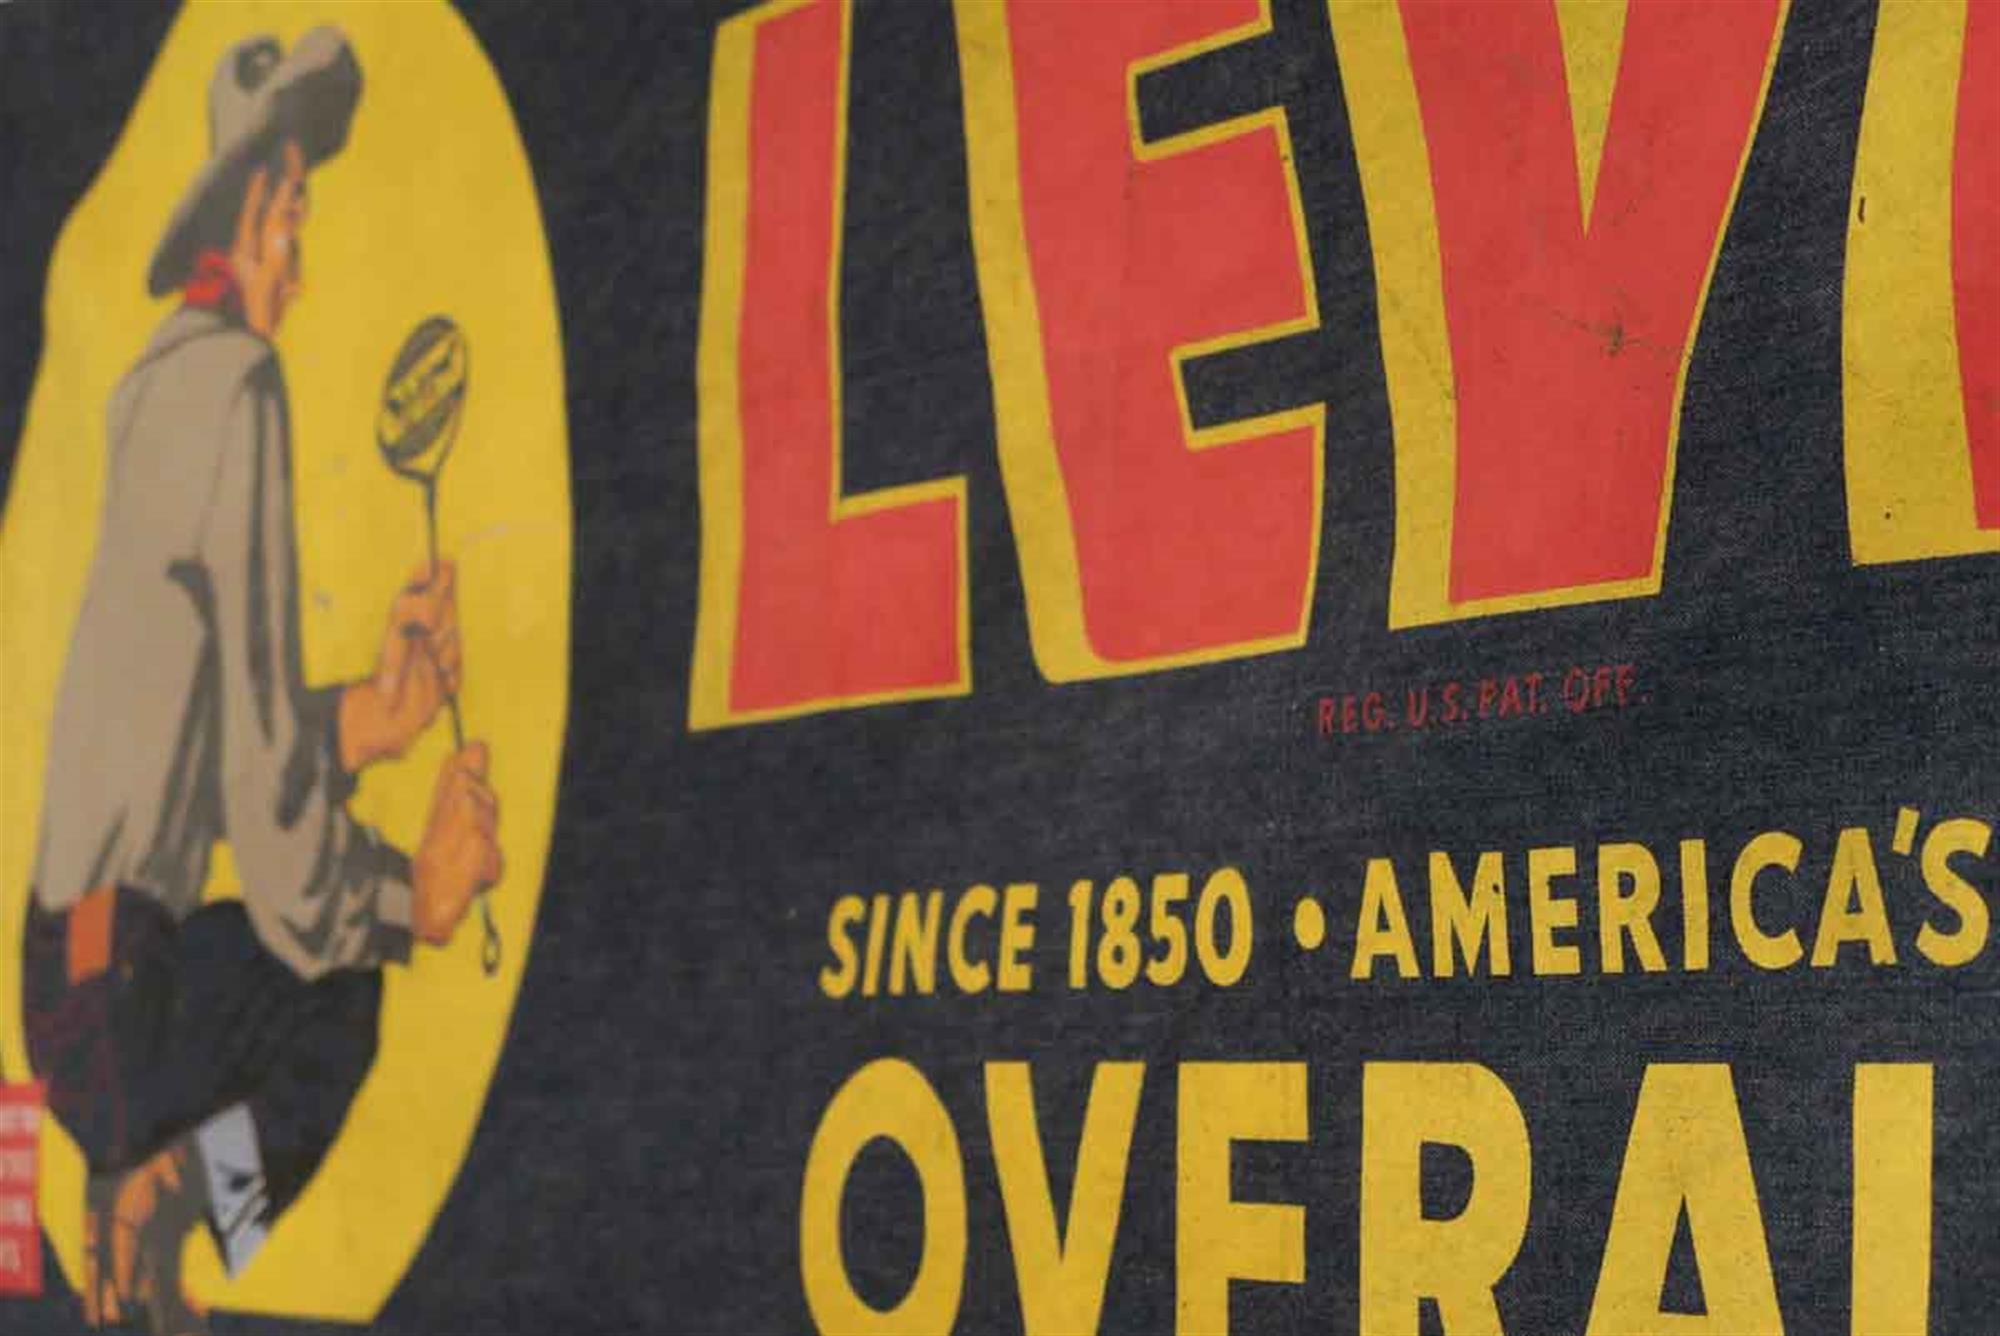 1950s Original Levis Denim Sign Advertisement with Rare Image For Sale at  1stDibs | vintage levis sign